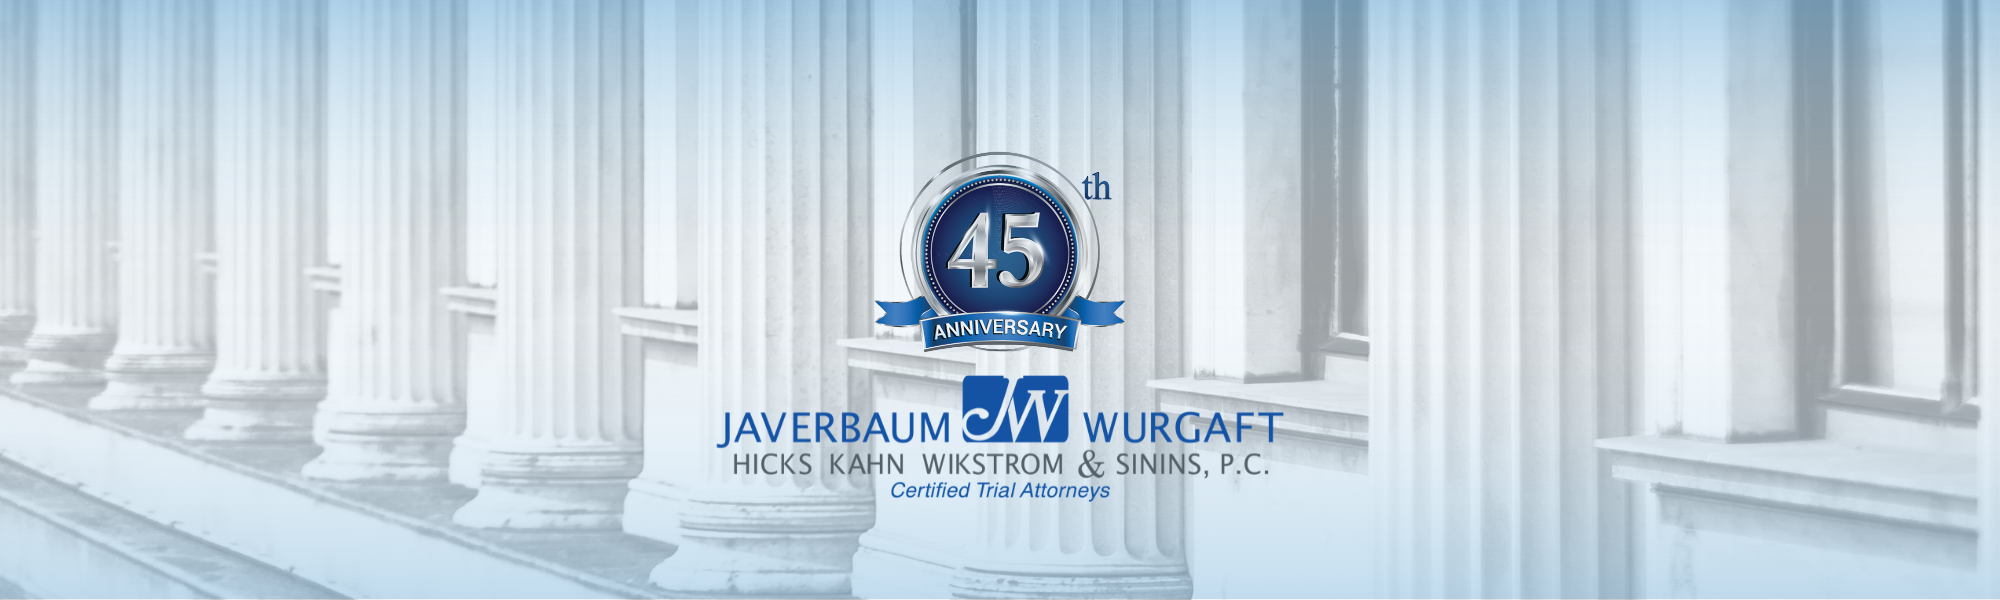 Javerbaum Wurgaft 45th Anniversary Emblem